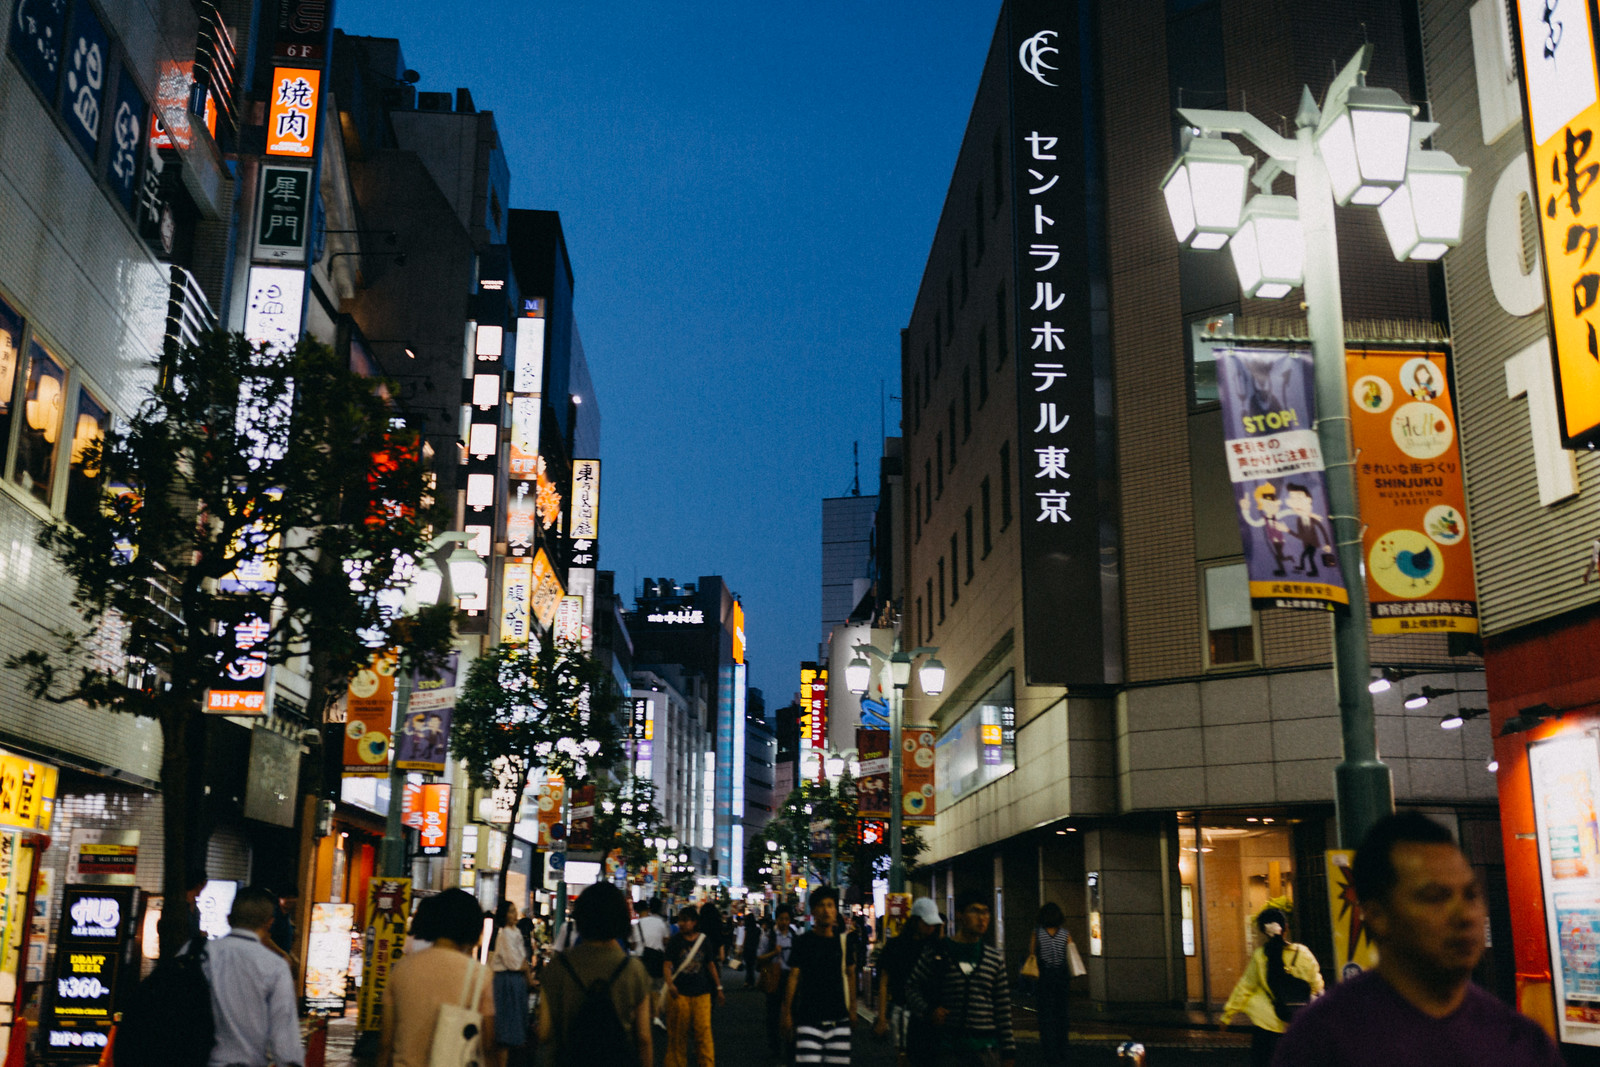 Lots of people in crowded shinjuku street experiencing night life